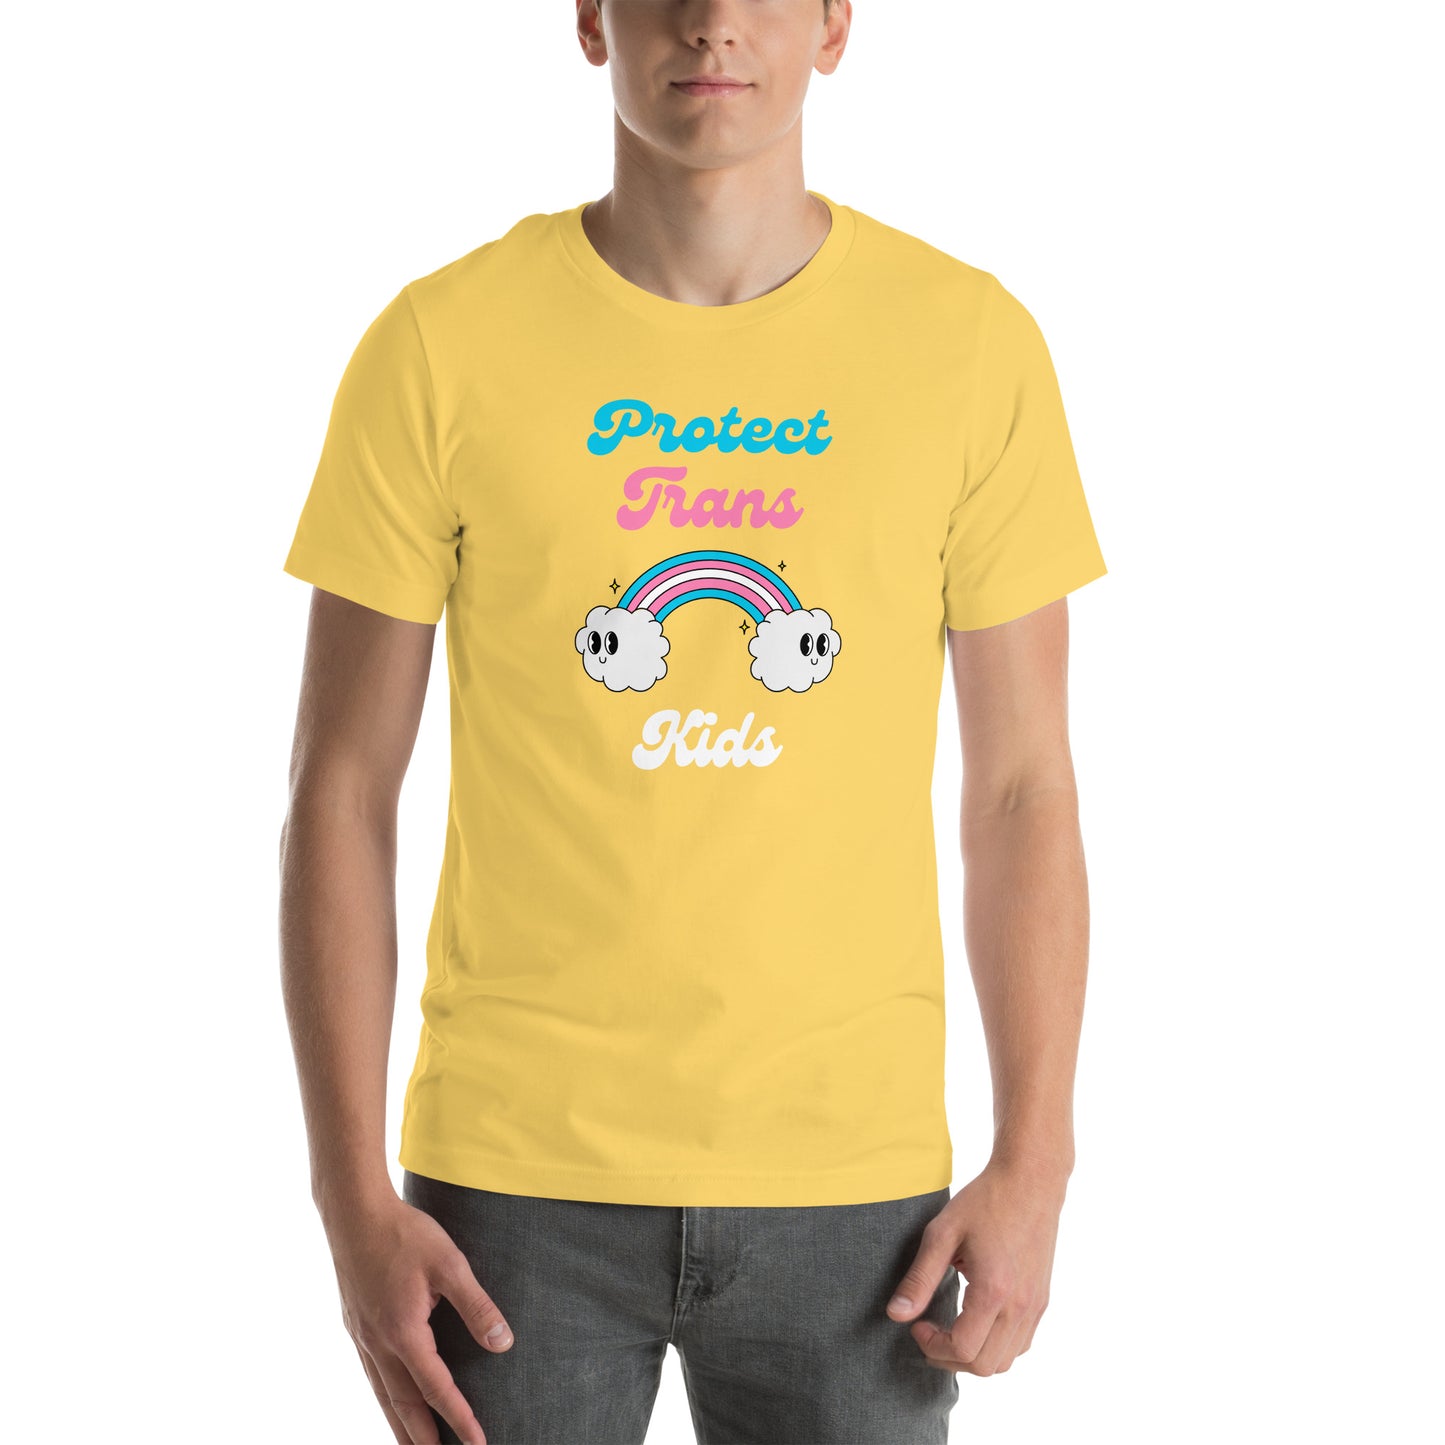 "Protect Trans Kids" unisex t-shirt